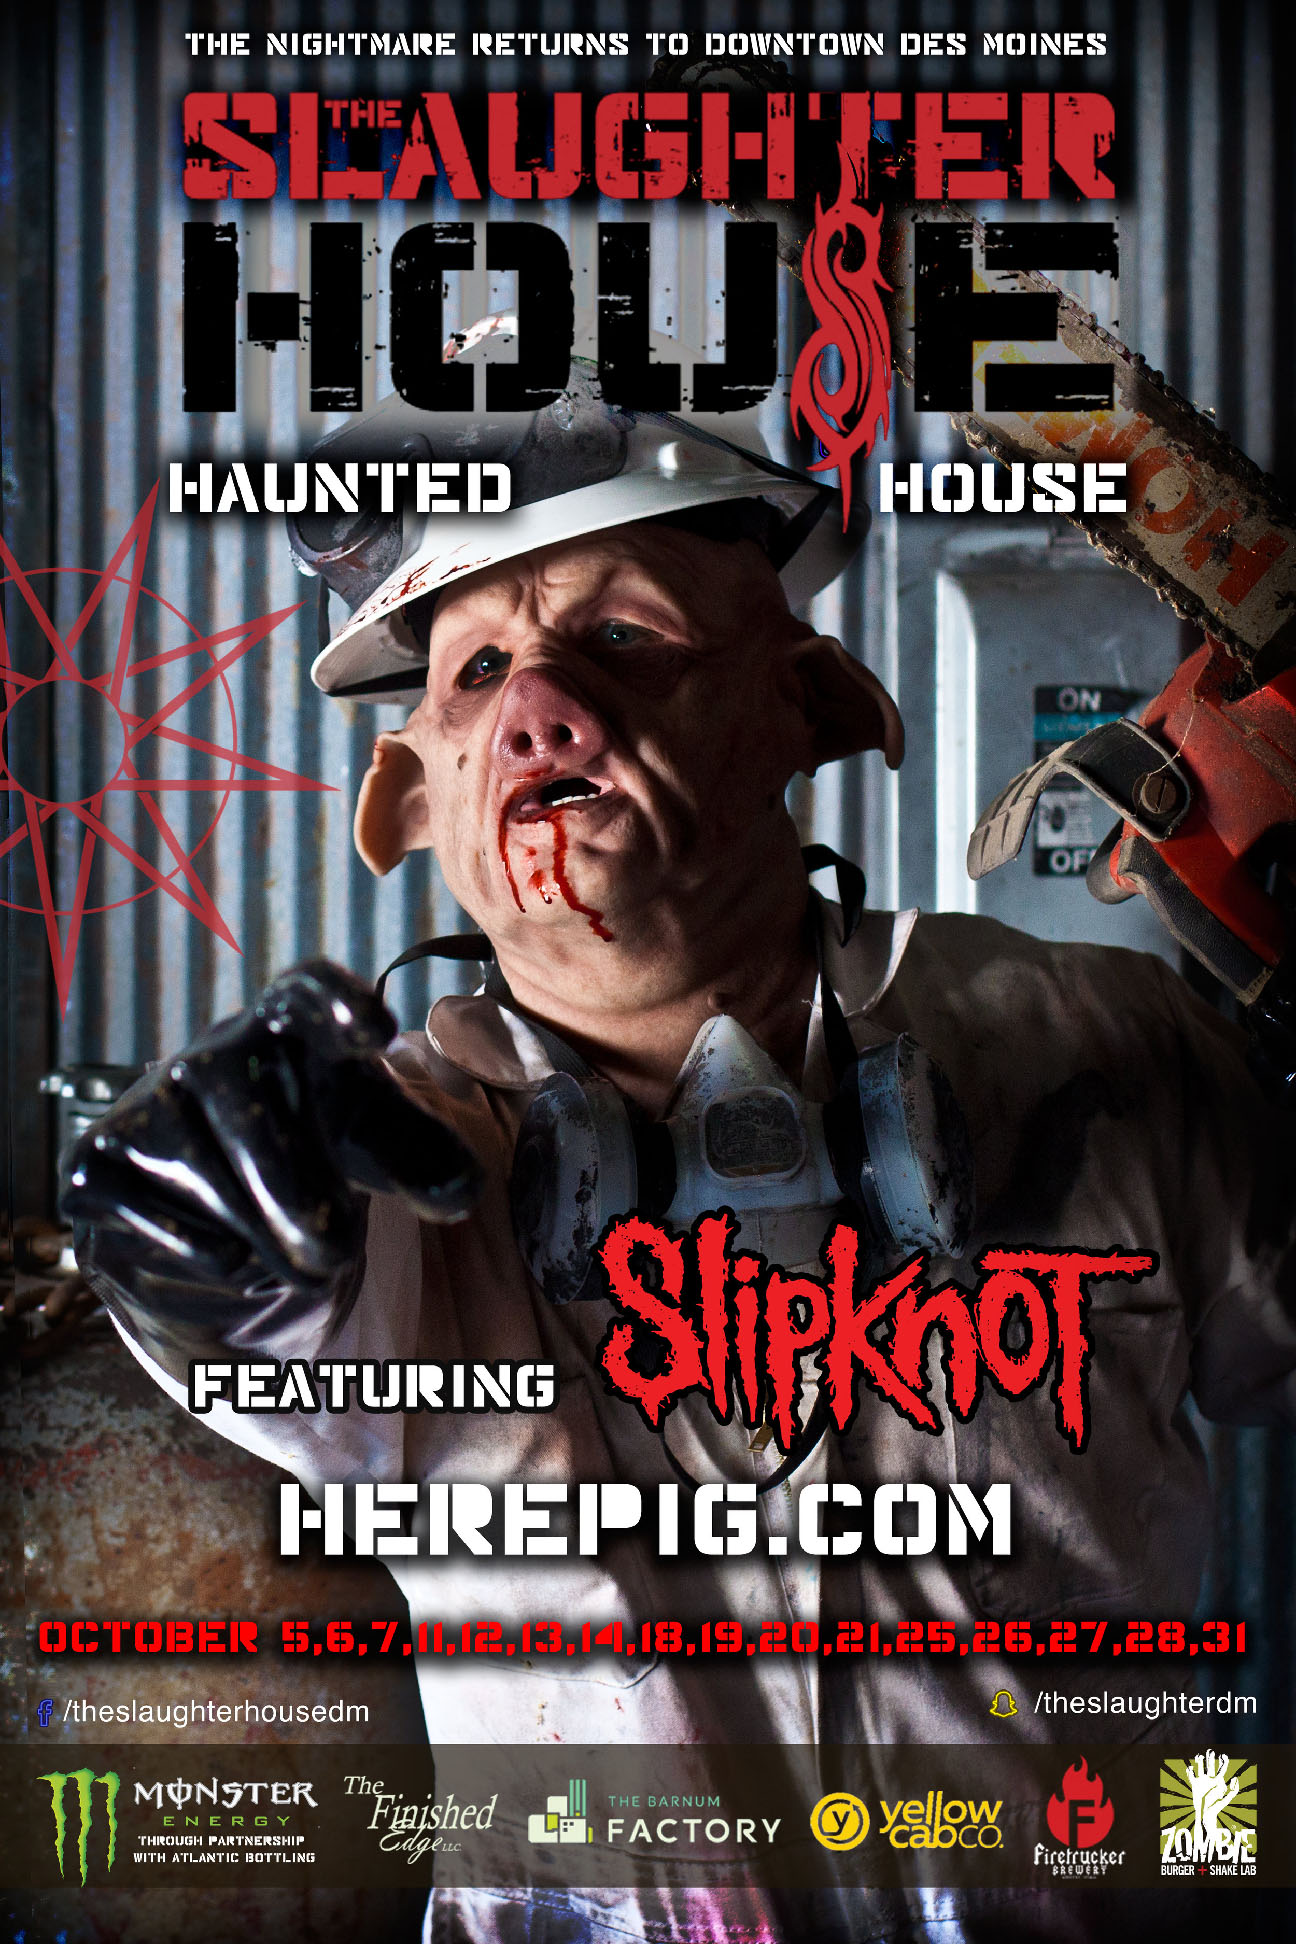 Slipknot partner with the slaughterhouse for chilling hometown appearance